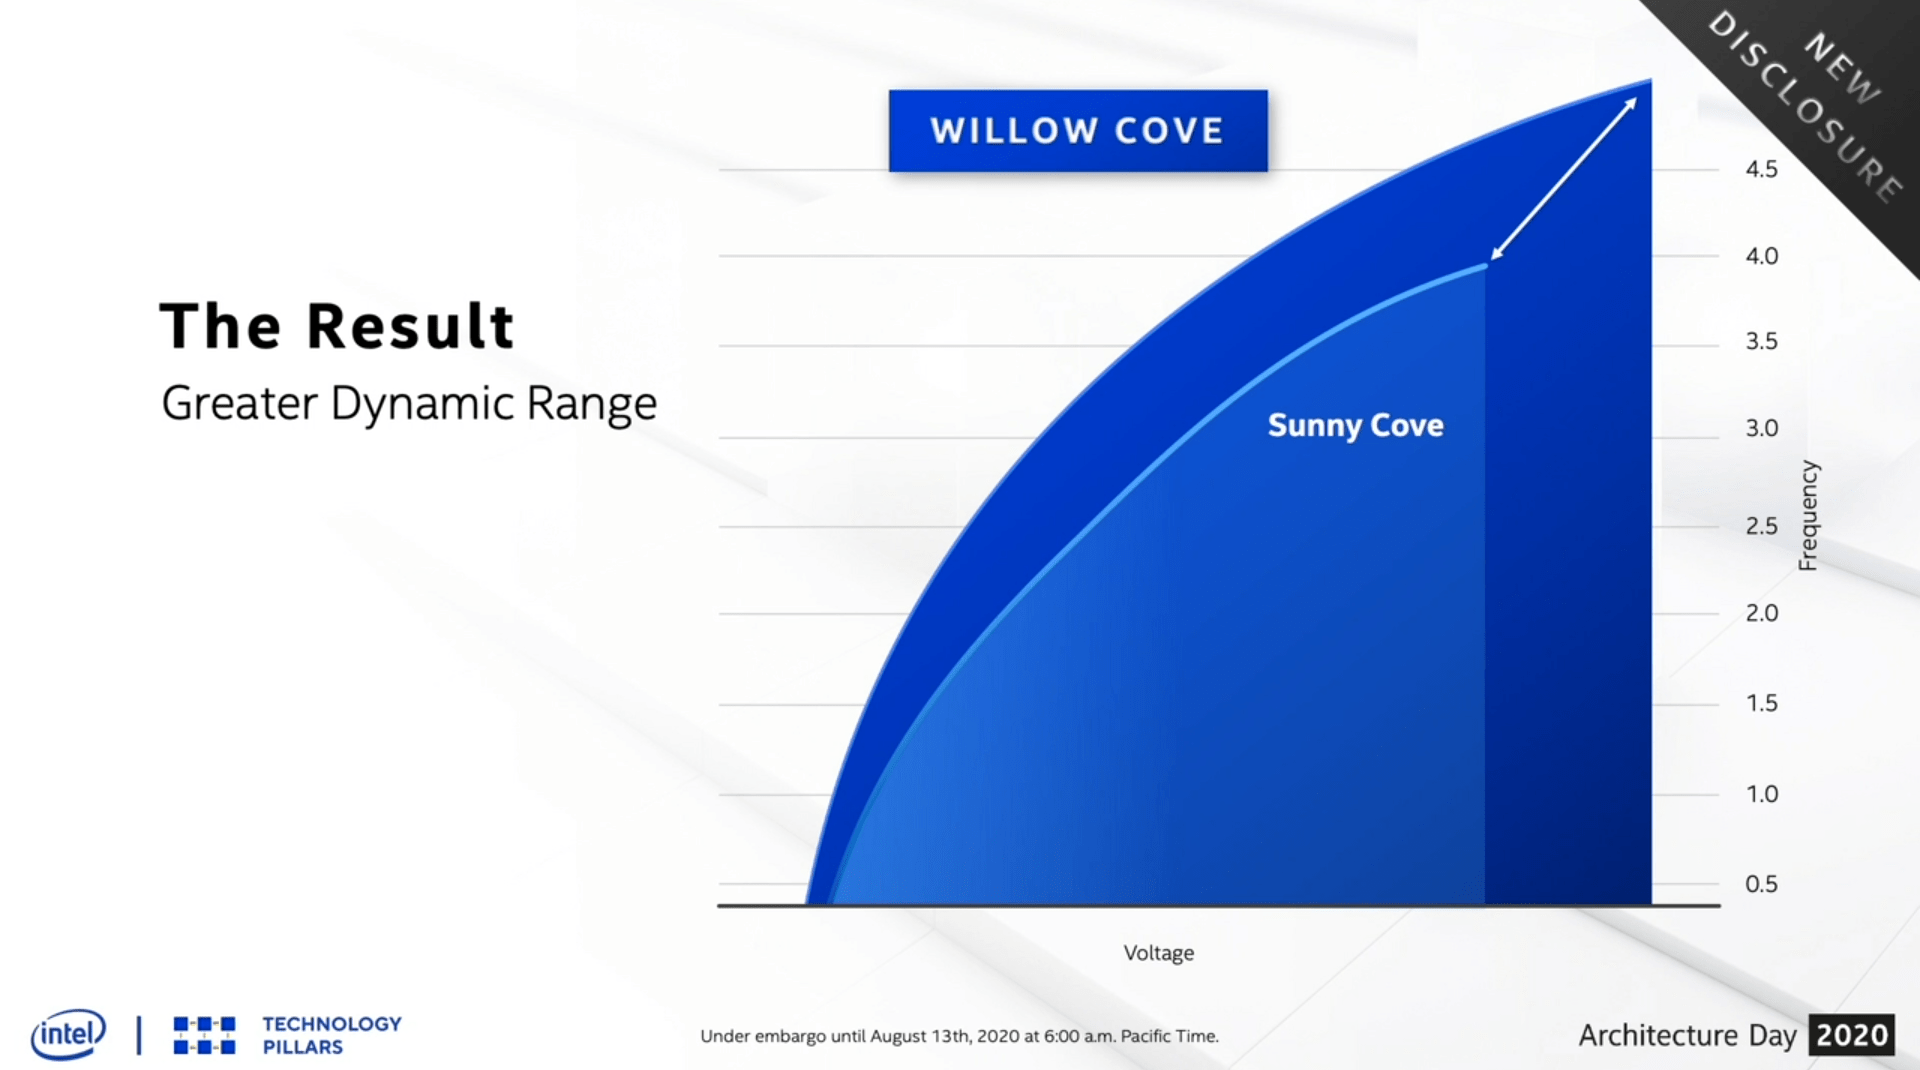 Sunny-cove-Taktkurve im Vergleich zu Willow Cove